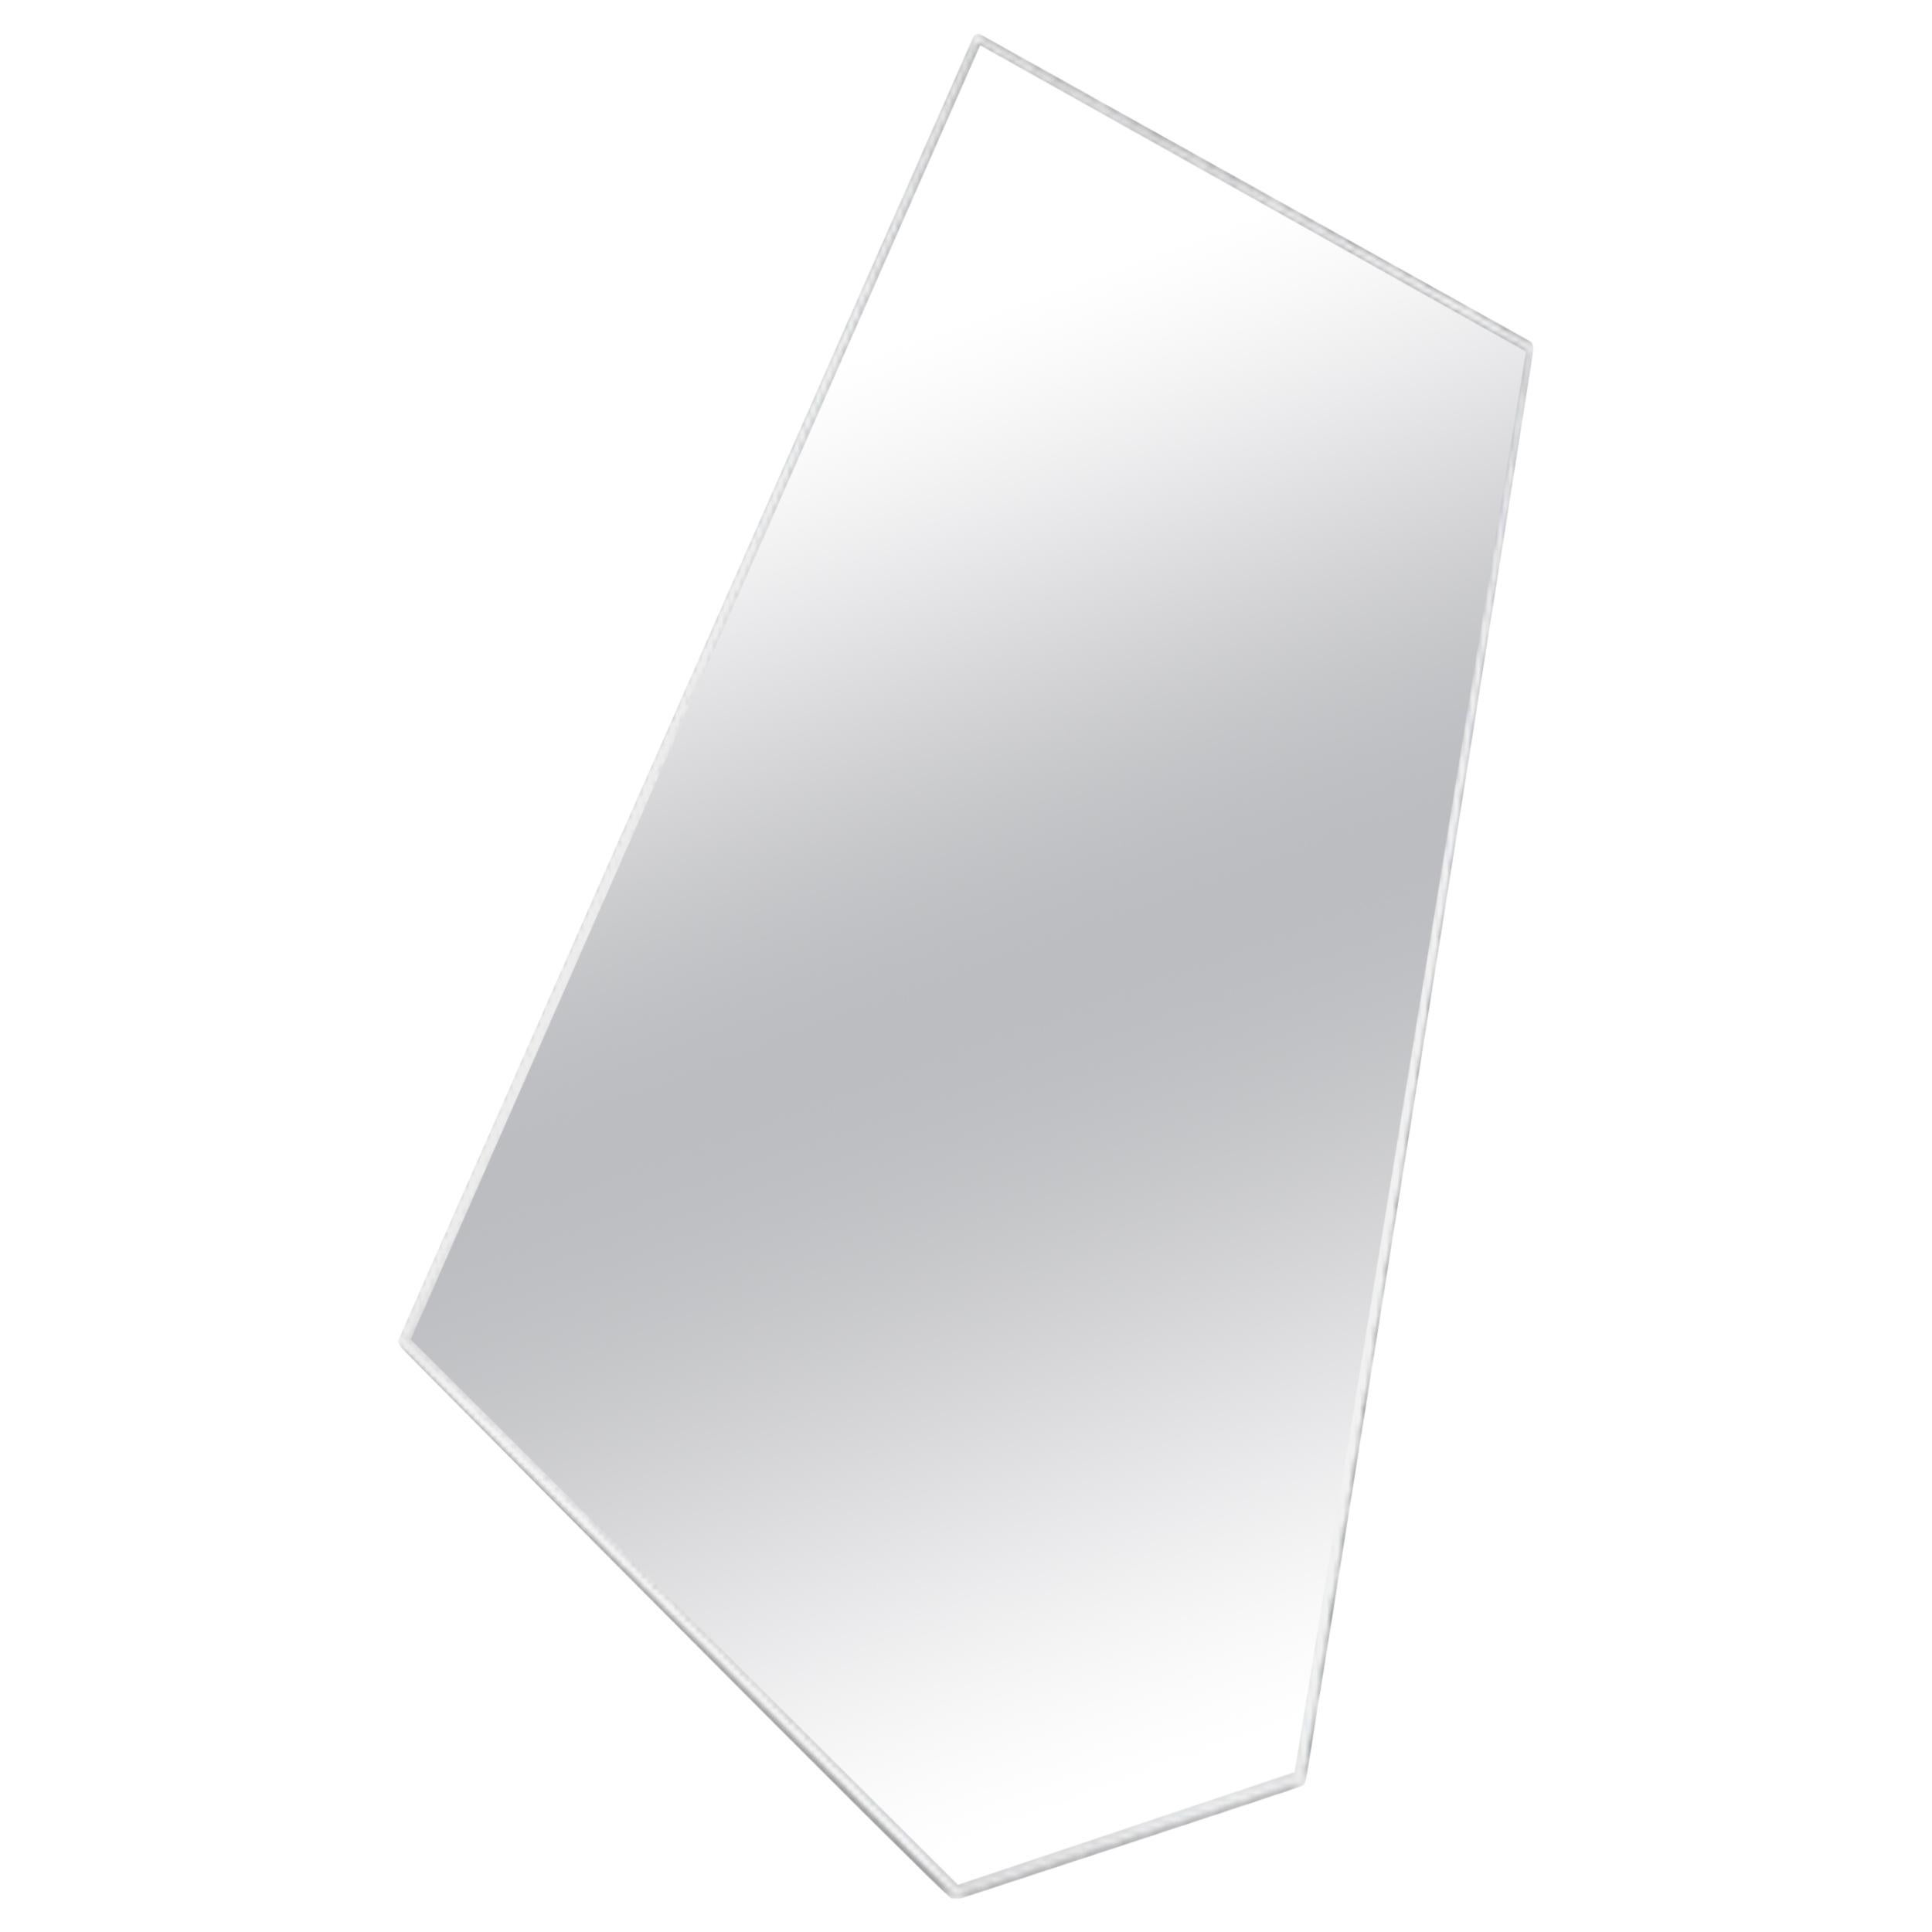 Fiam Mirage MI/C Wall Mirror in Glass, by Daniel Libeskind